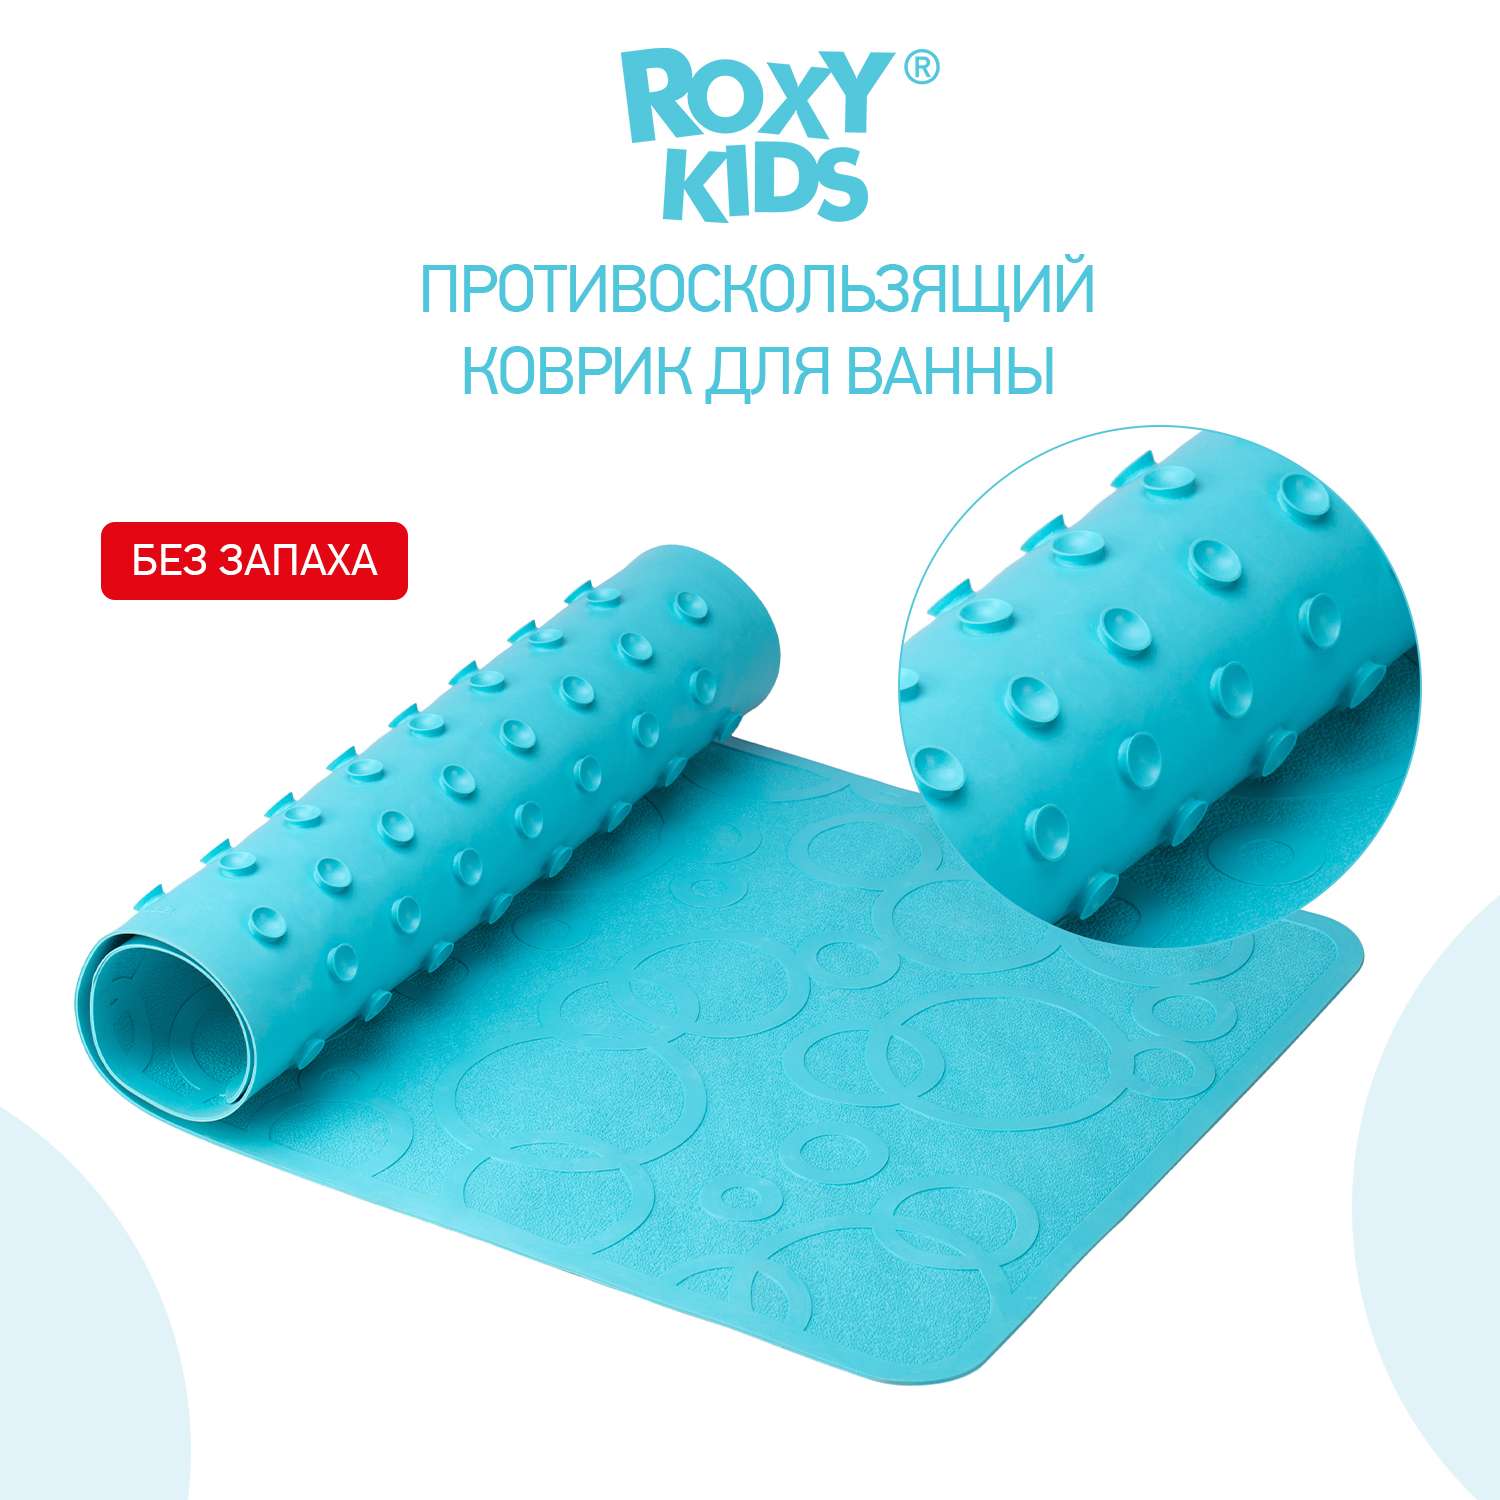 Коврик для ванны резиновый антискользящий Roxy-Kids оптом